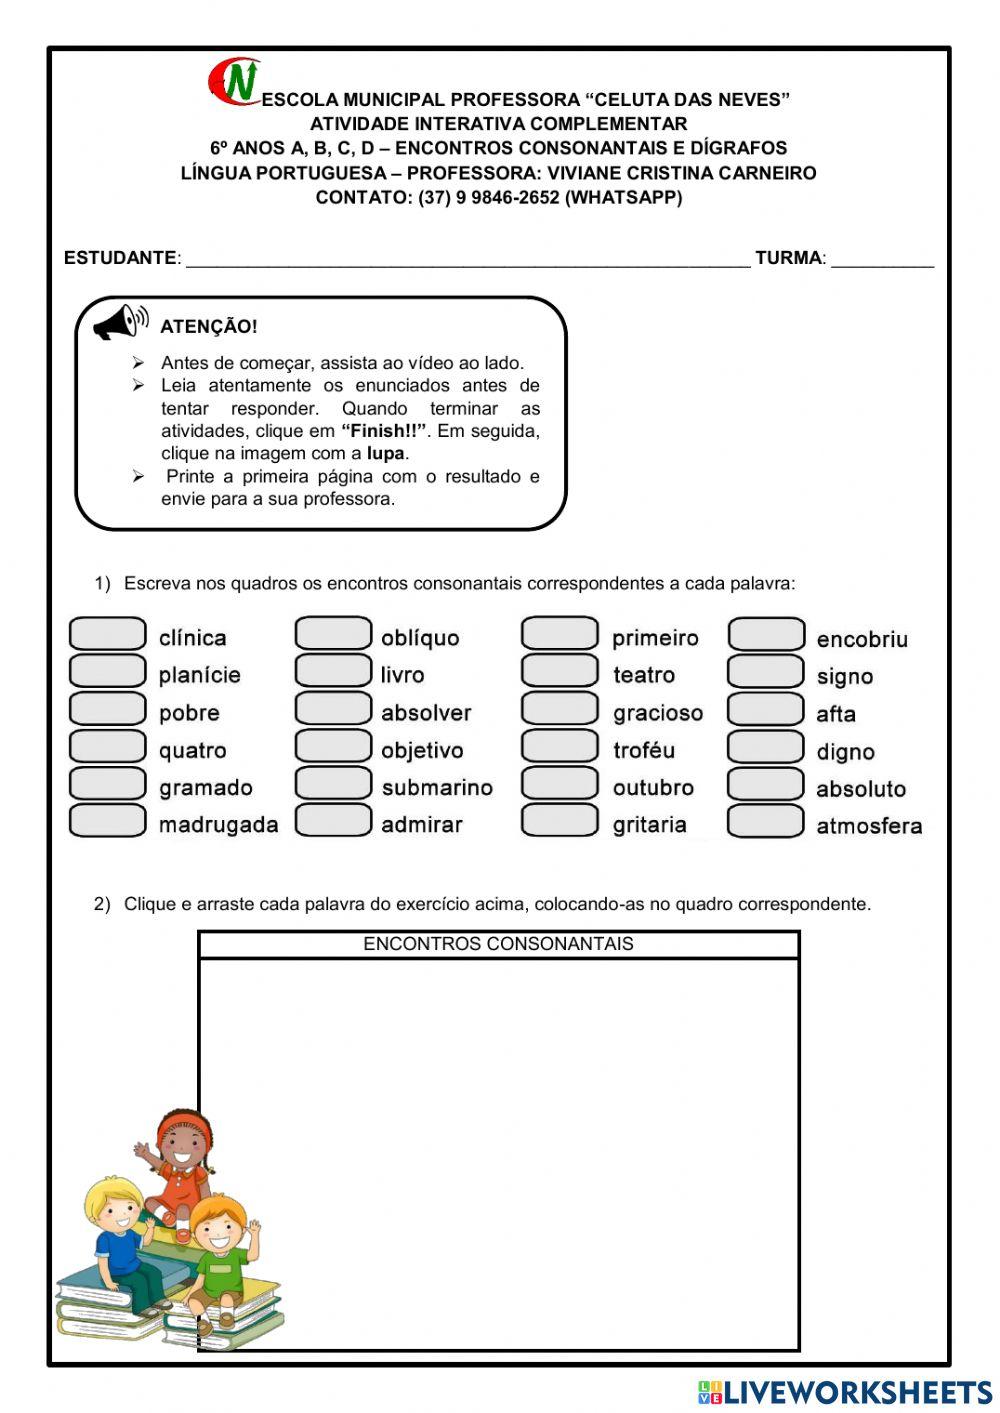 Encontros consonantais e dígrafos interactive worksheet | Live Worksheets